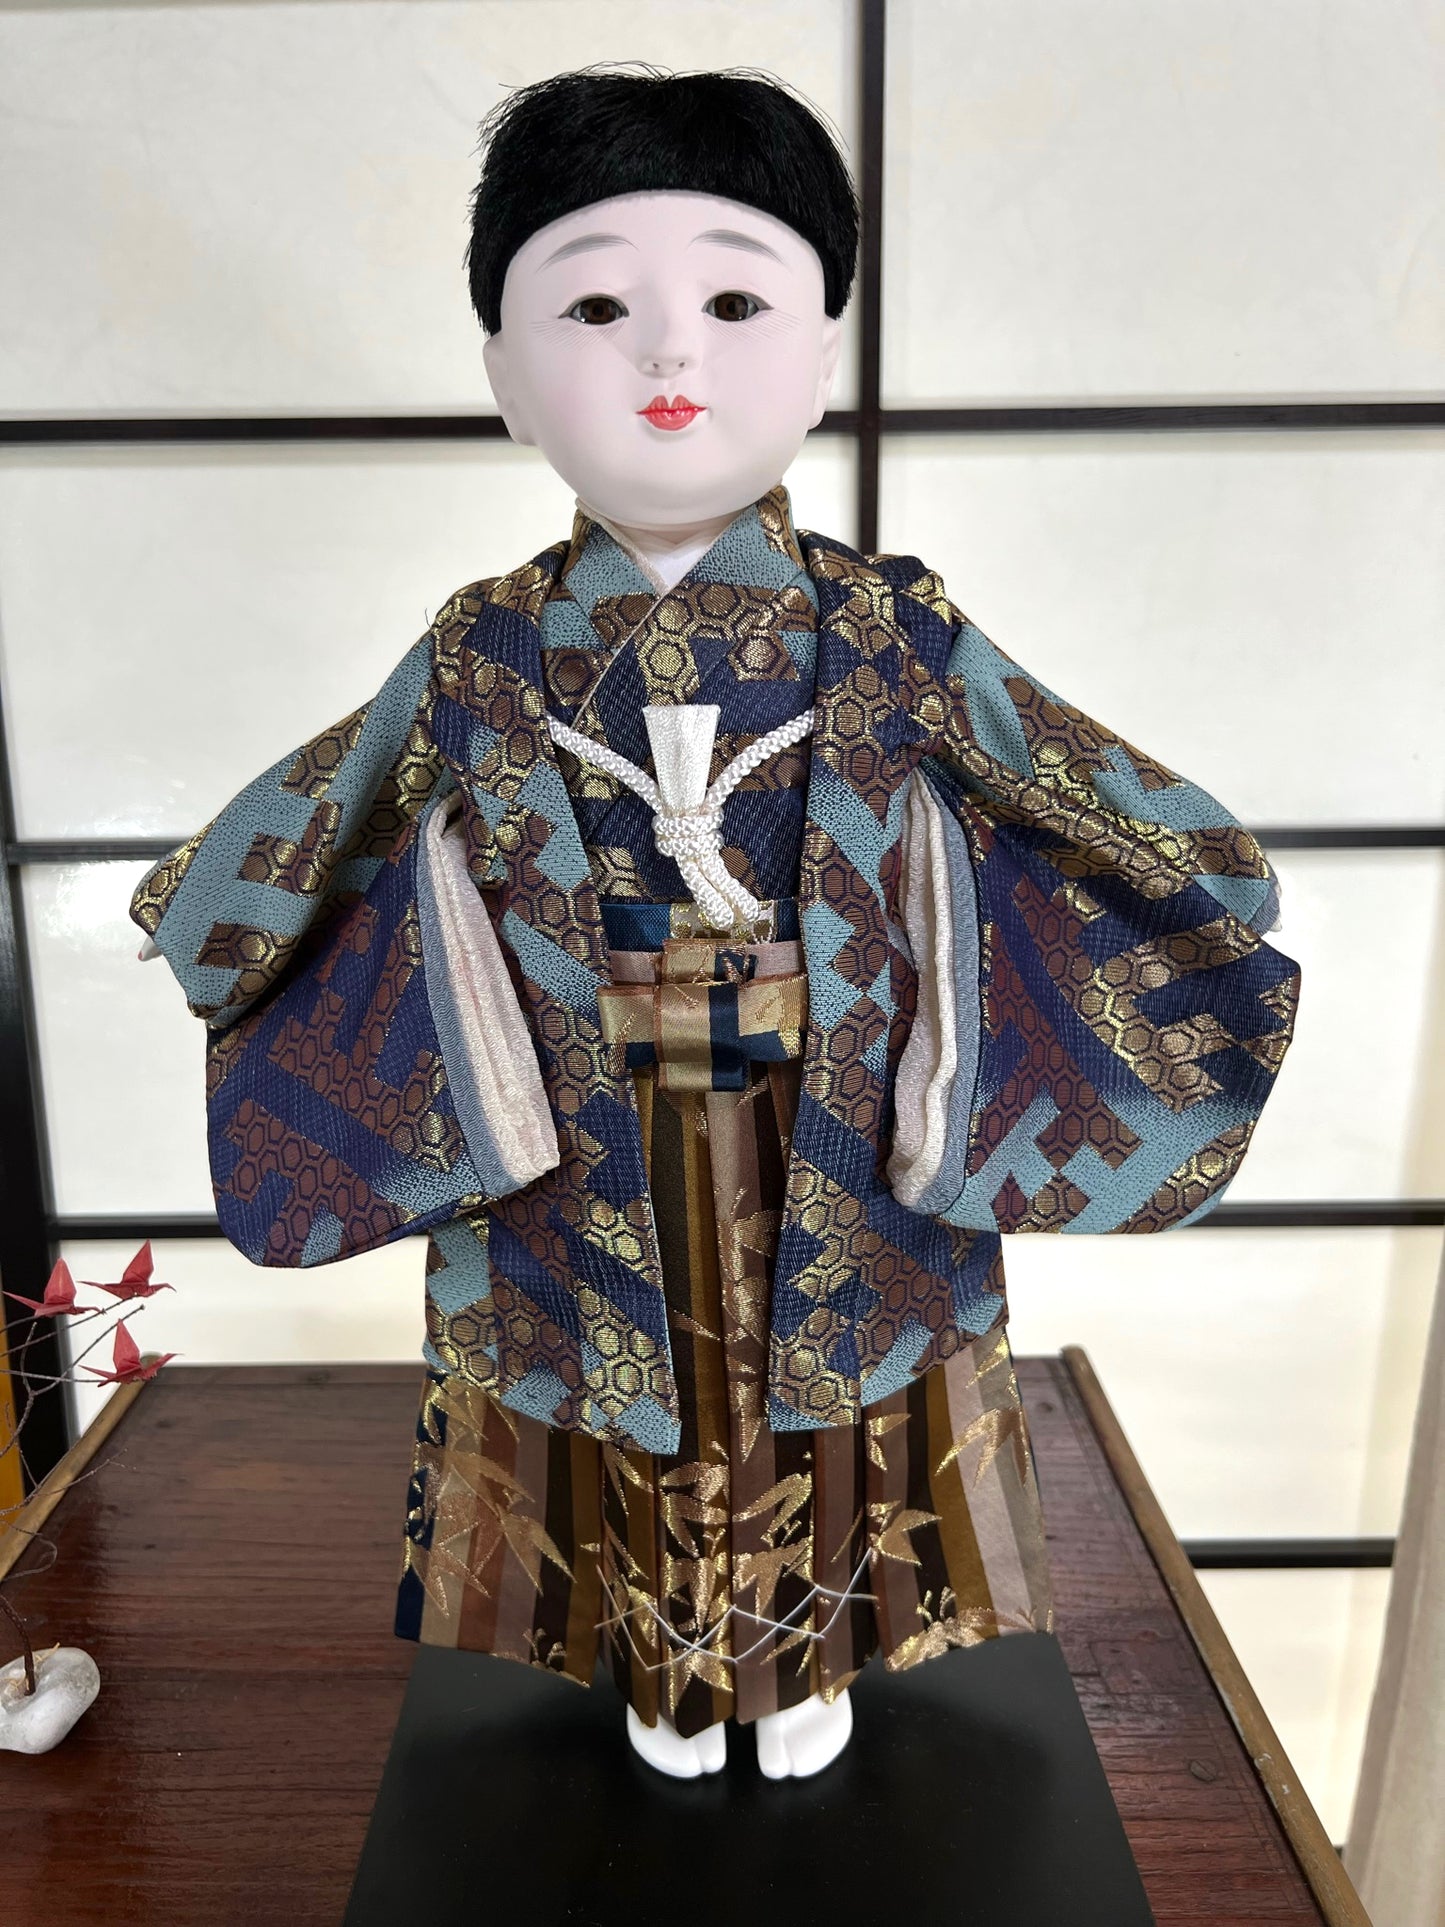 poupée japonaise Ichimatsu garçon, en kimono en soie bleu et beige